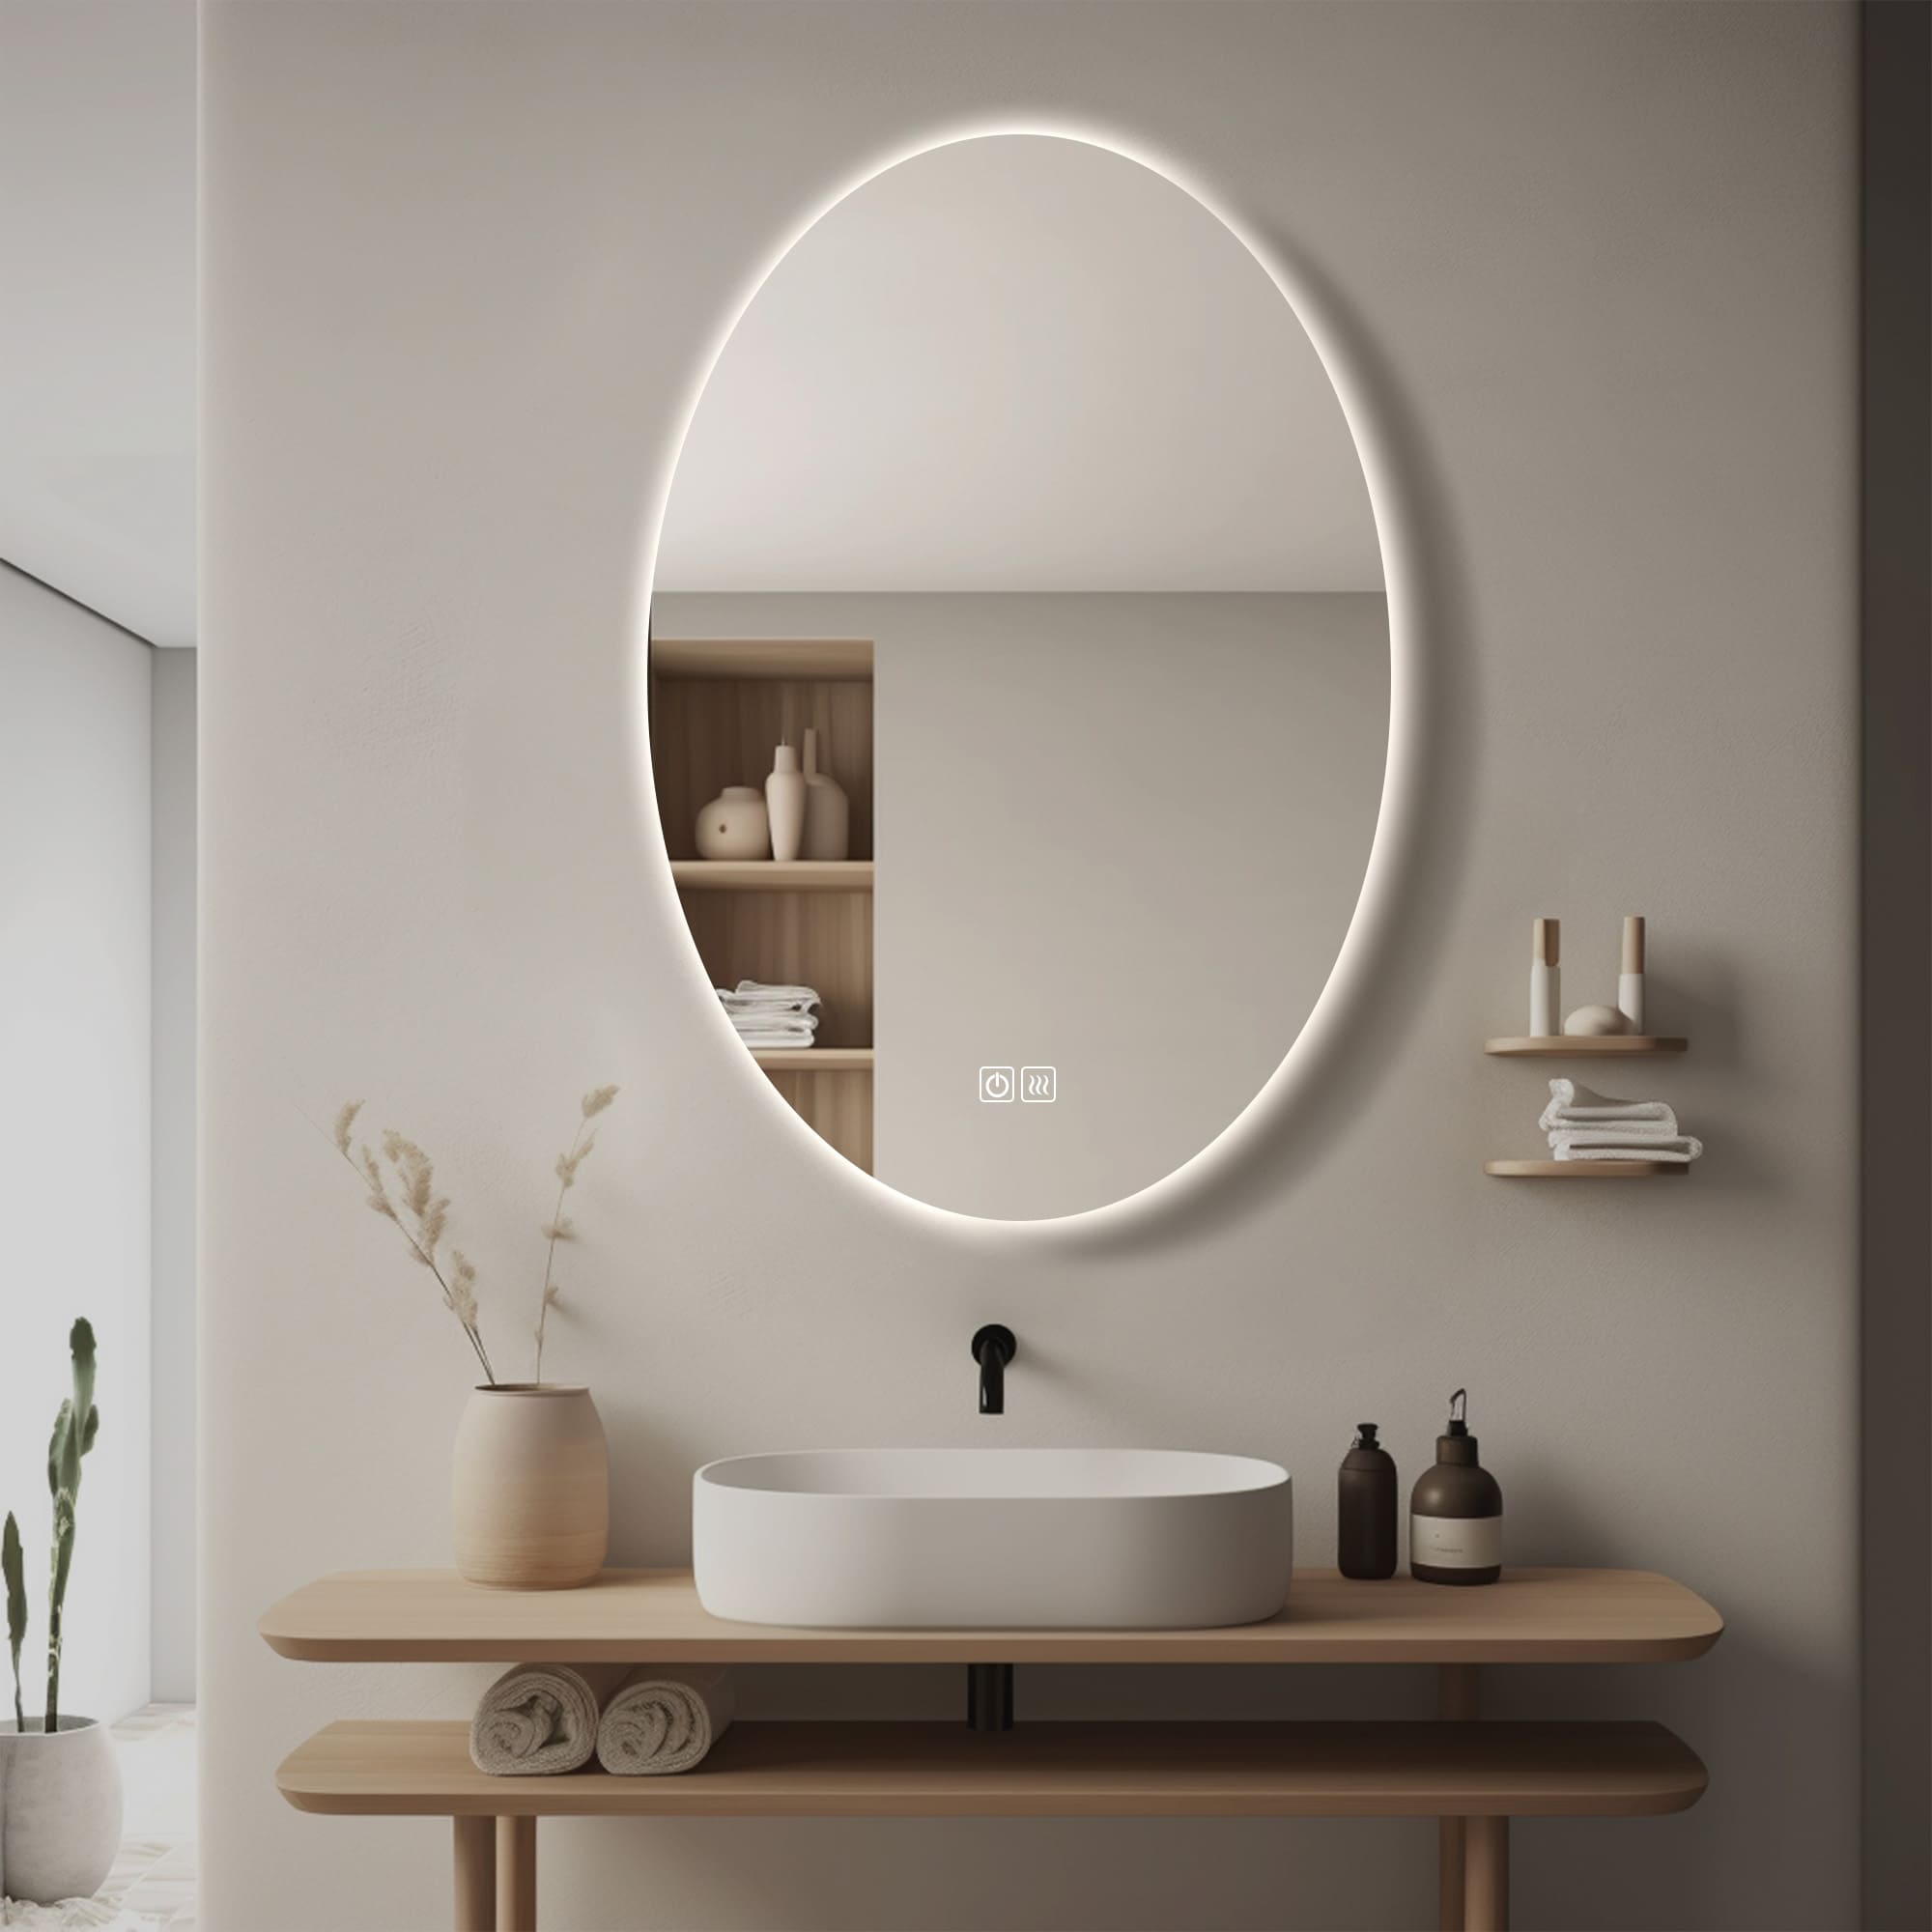 Ceres LED Mirror for bathroom 6000k backlight